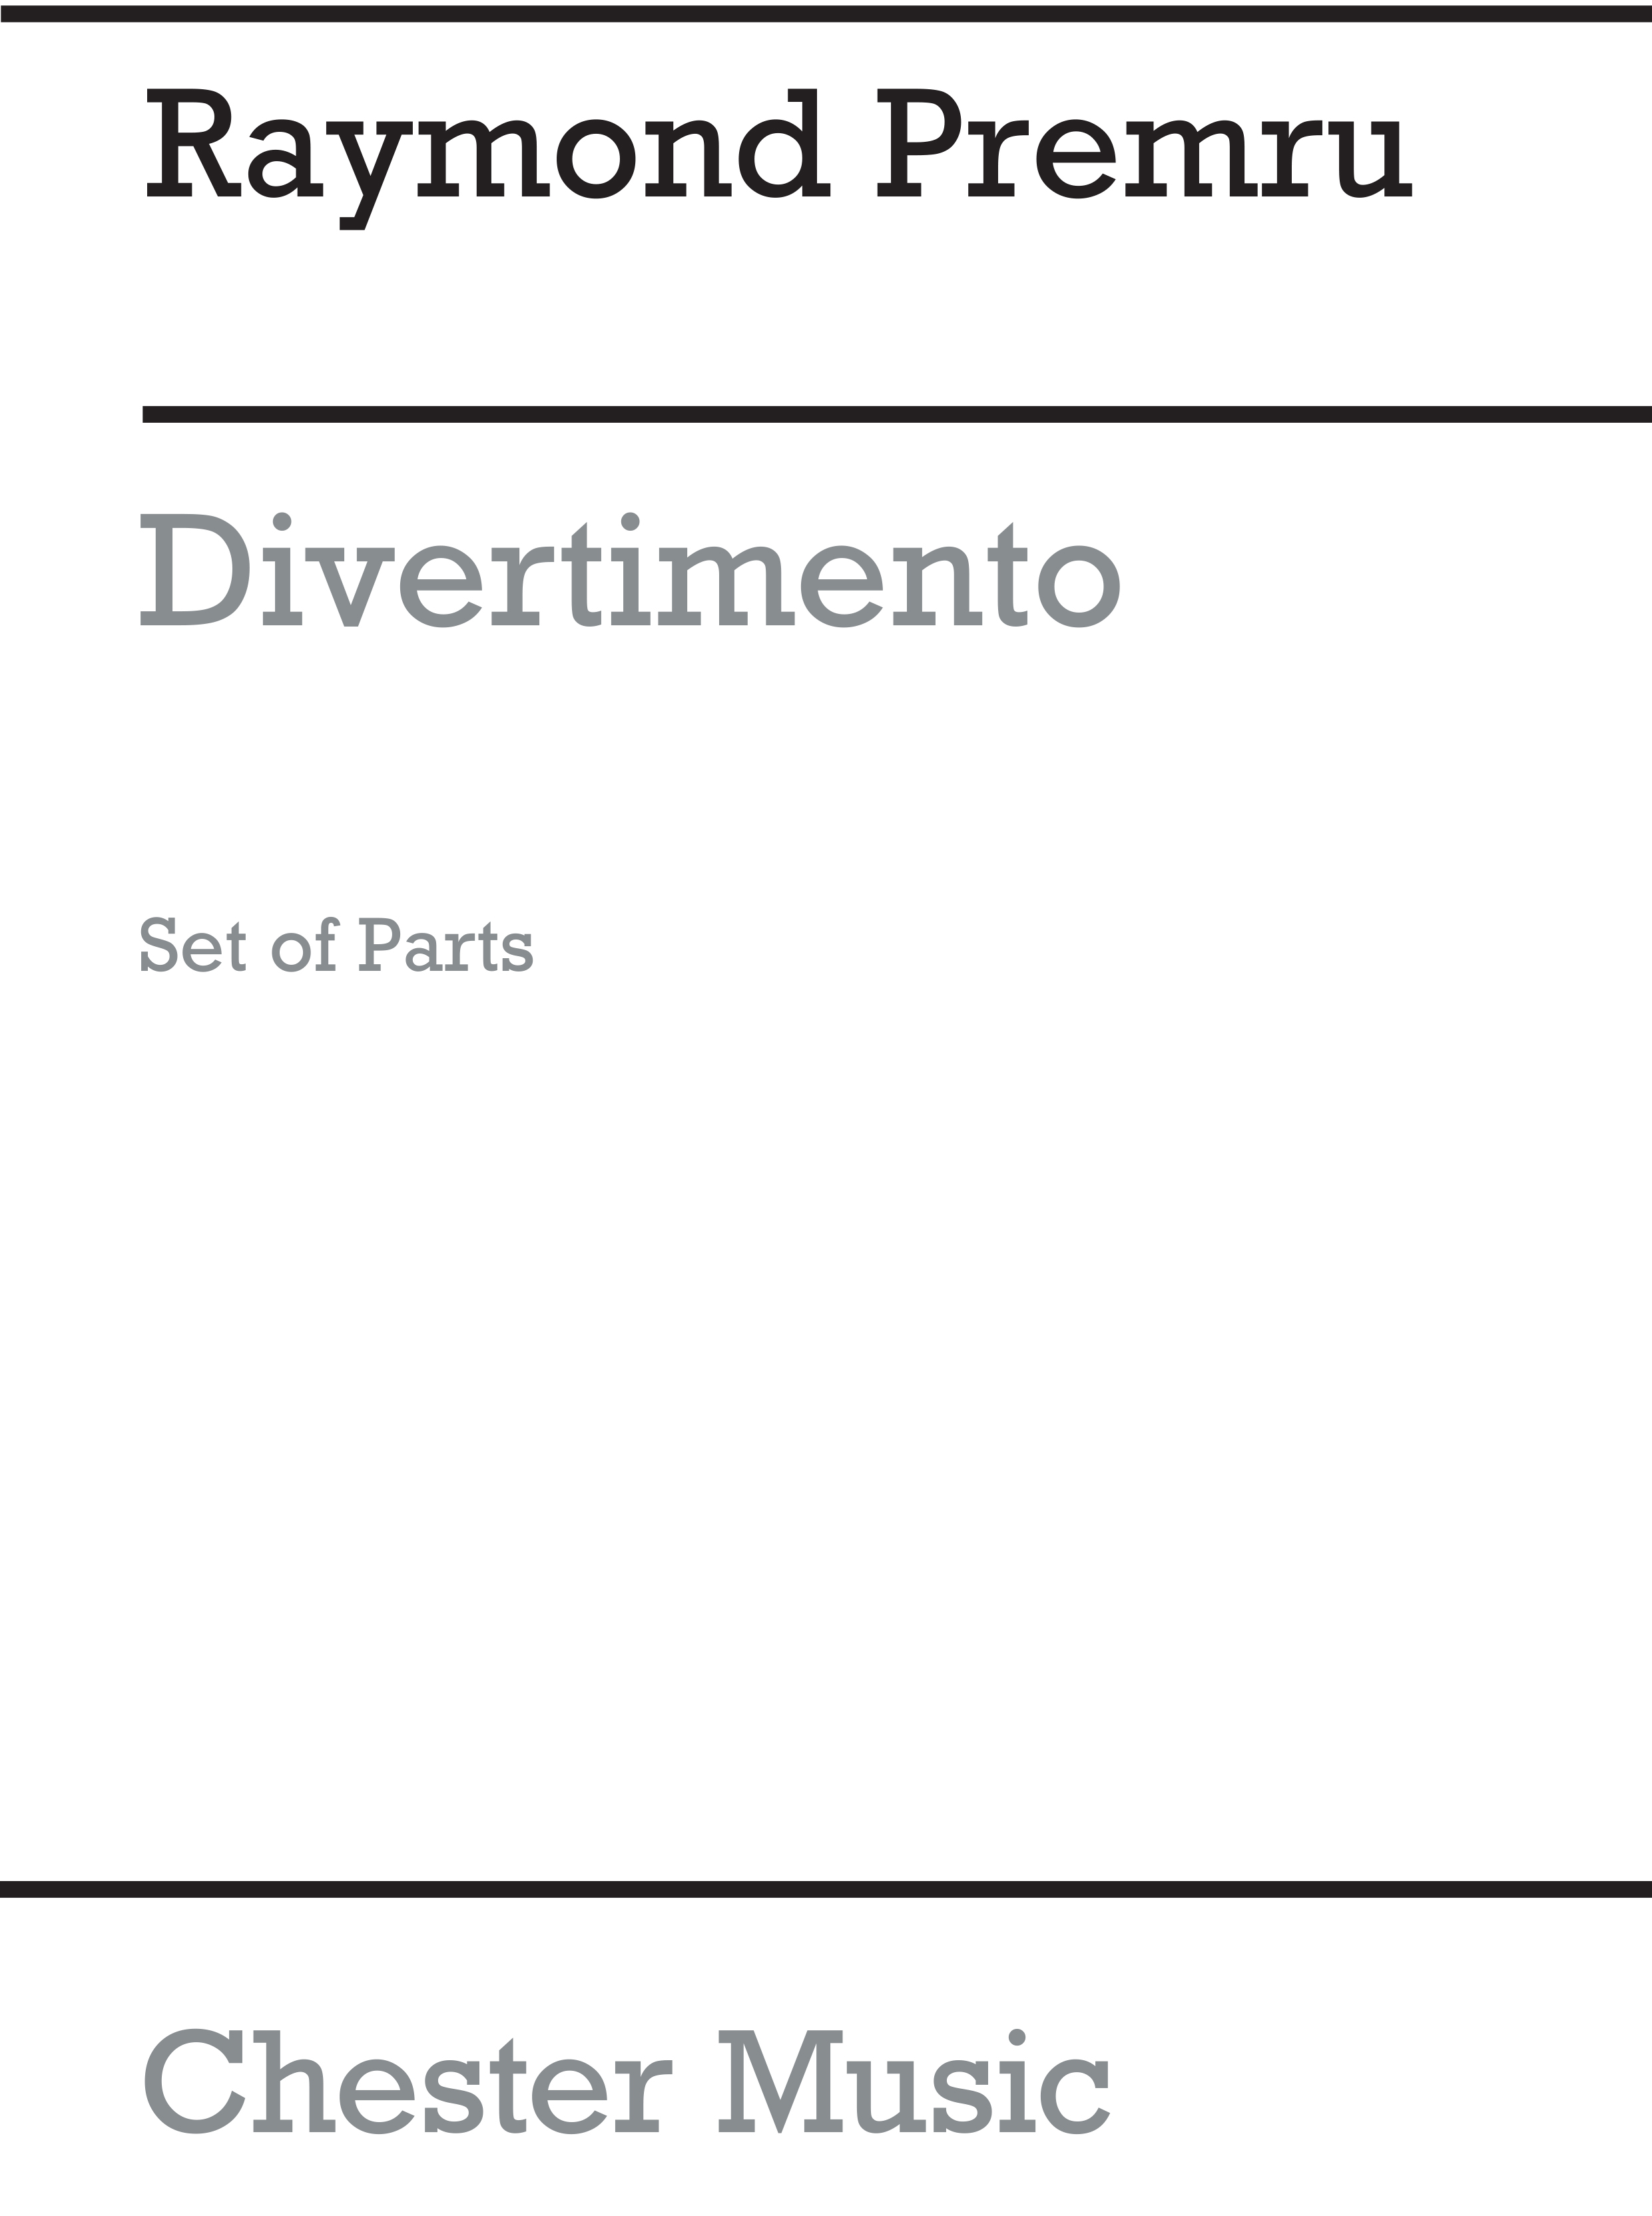 Raymond Premru: Divertimento 10 Parts (9 Movements) (Parts): Chamber Ensemble: